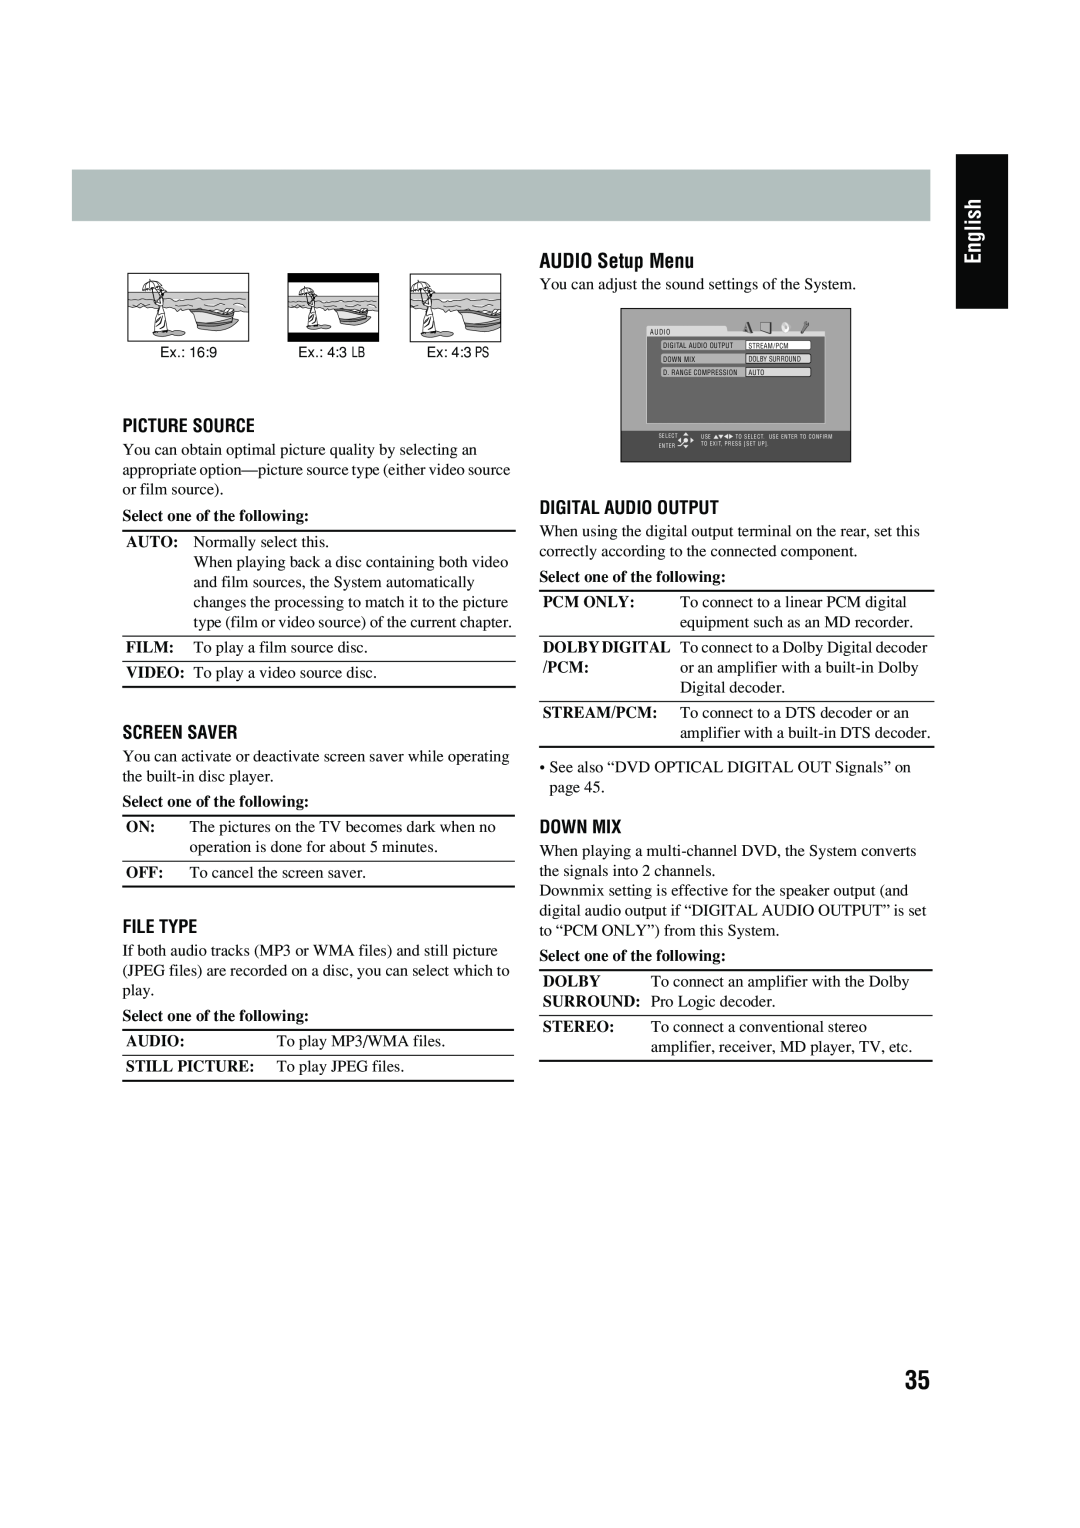 JVC UX-P450 manual English, AUDIO Setup Menu, Picture Source, Screen Saver, File Type, Digital Audio Output, Down Mix 